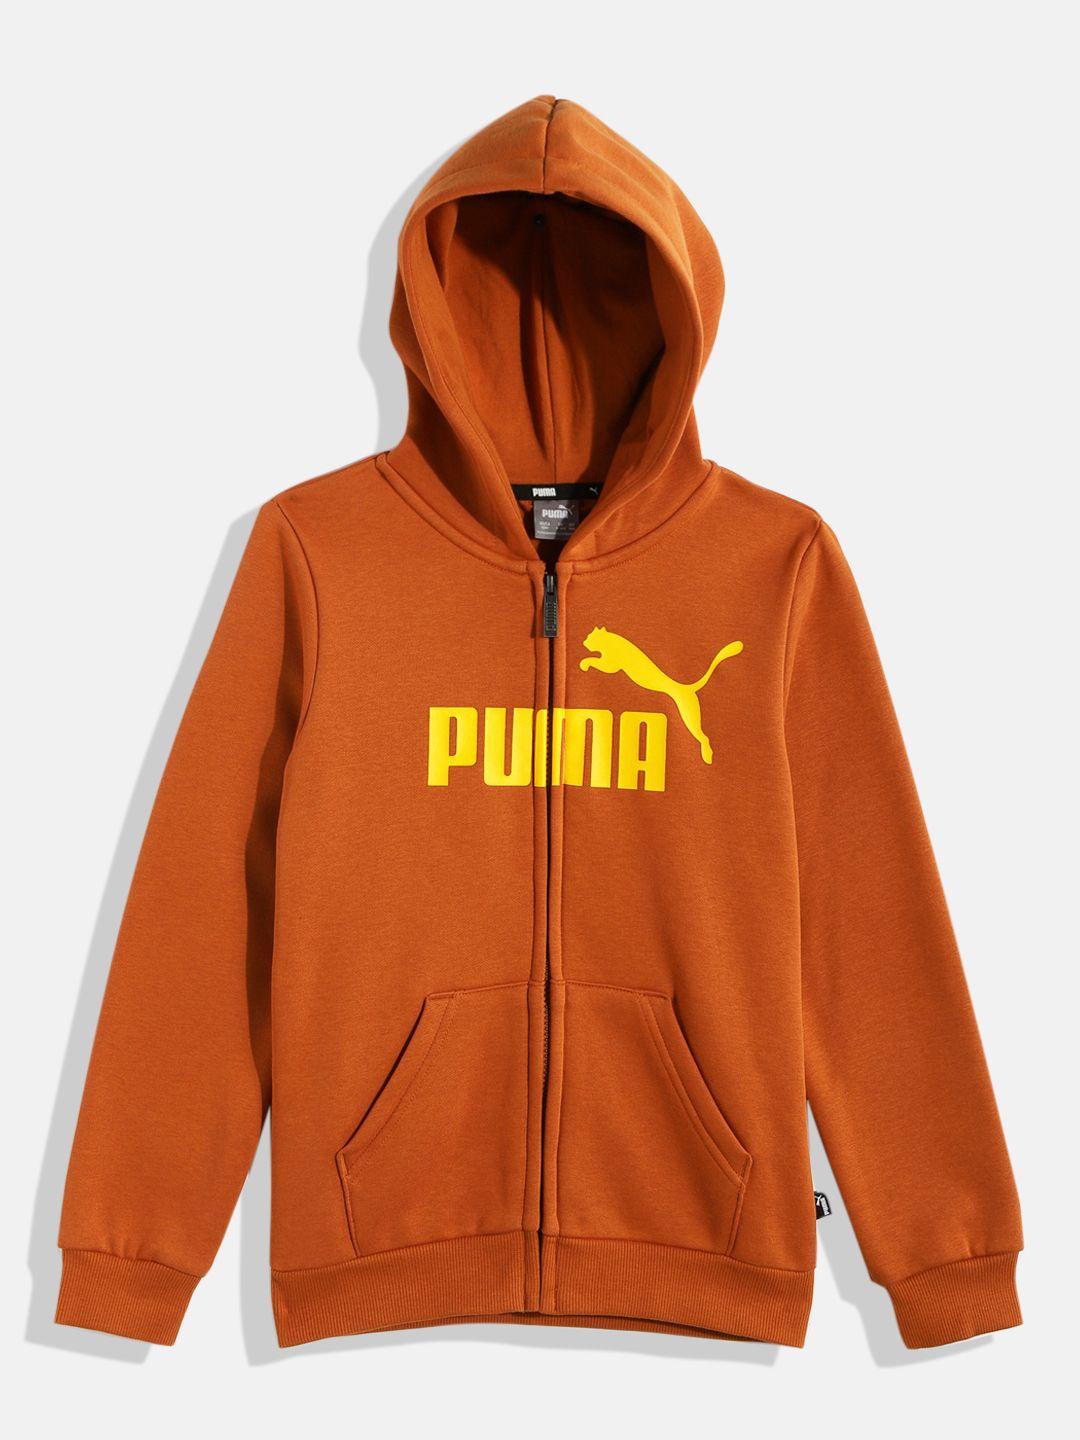 puma boys brown brand logo printed outdoor bomber jacket